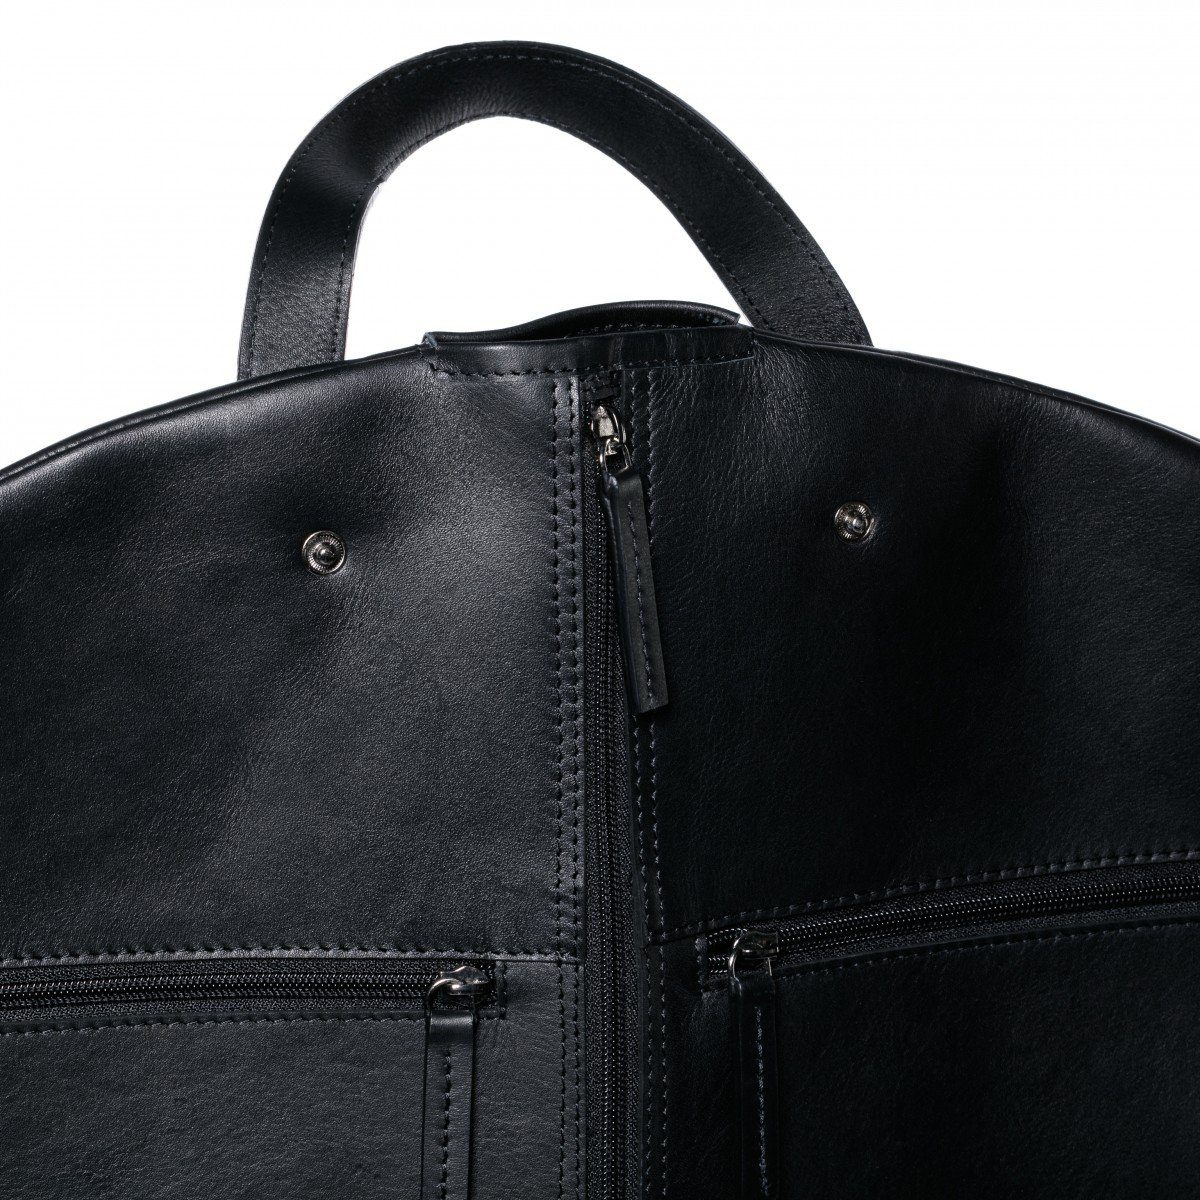 Reisetasche schwarz FEYNSINN Kleidersack echt ARIK, Anzugsack Leder